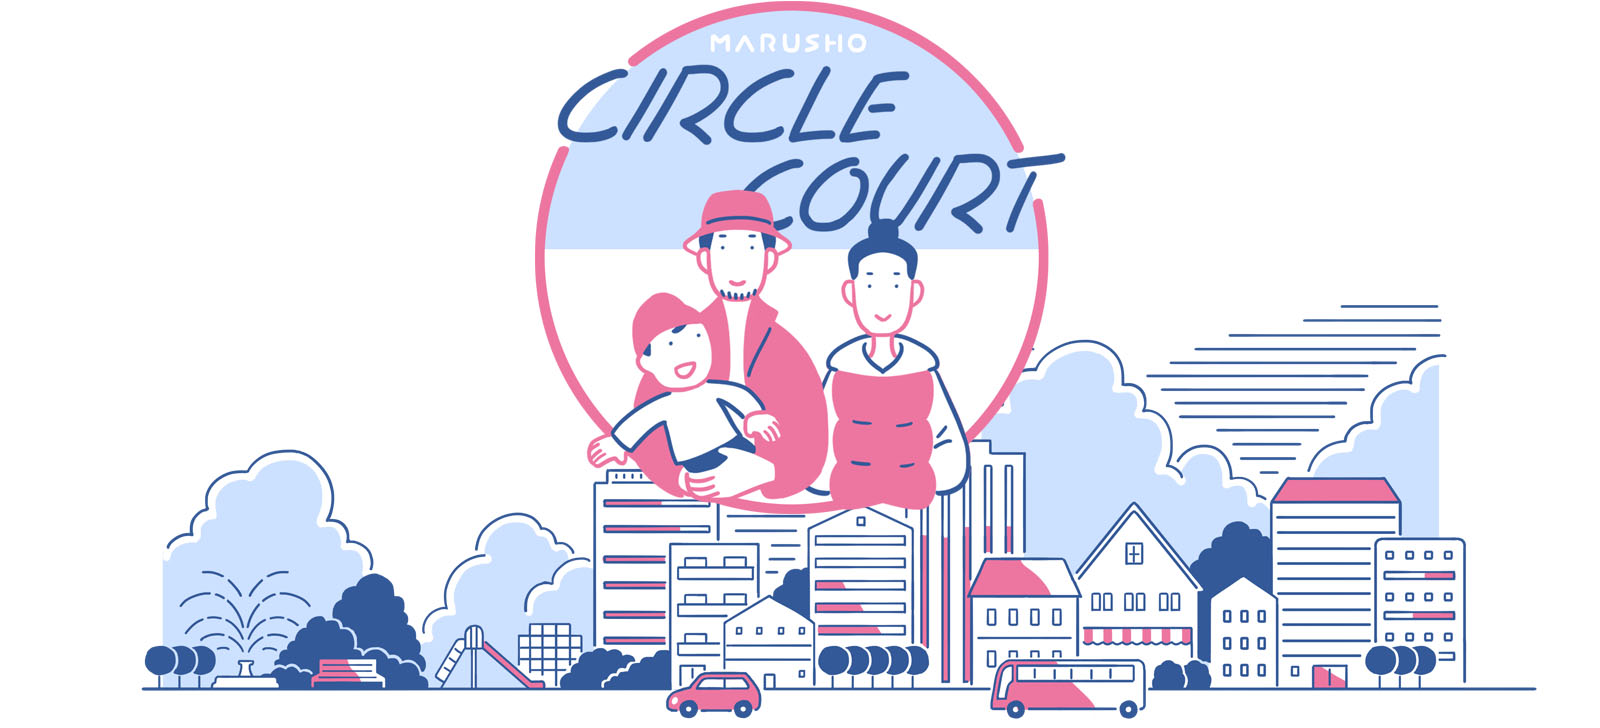 MARUSHO CIRCLE COURT